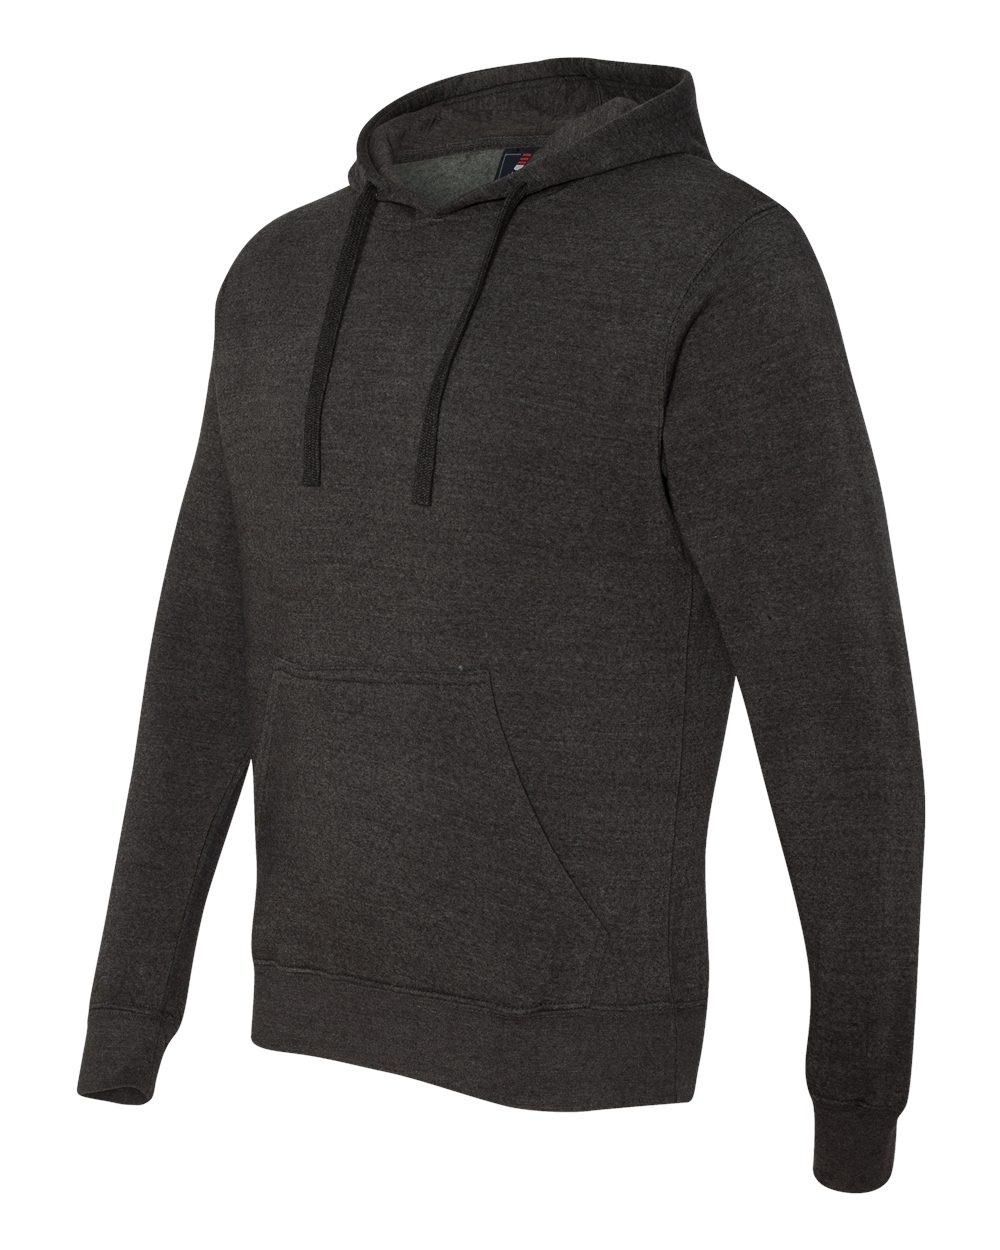 J. America Cloud Fleece Hooded Pullover Sweatshirt - 8620